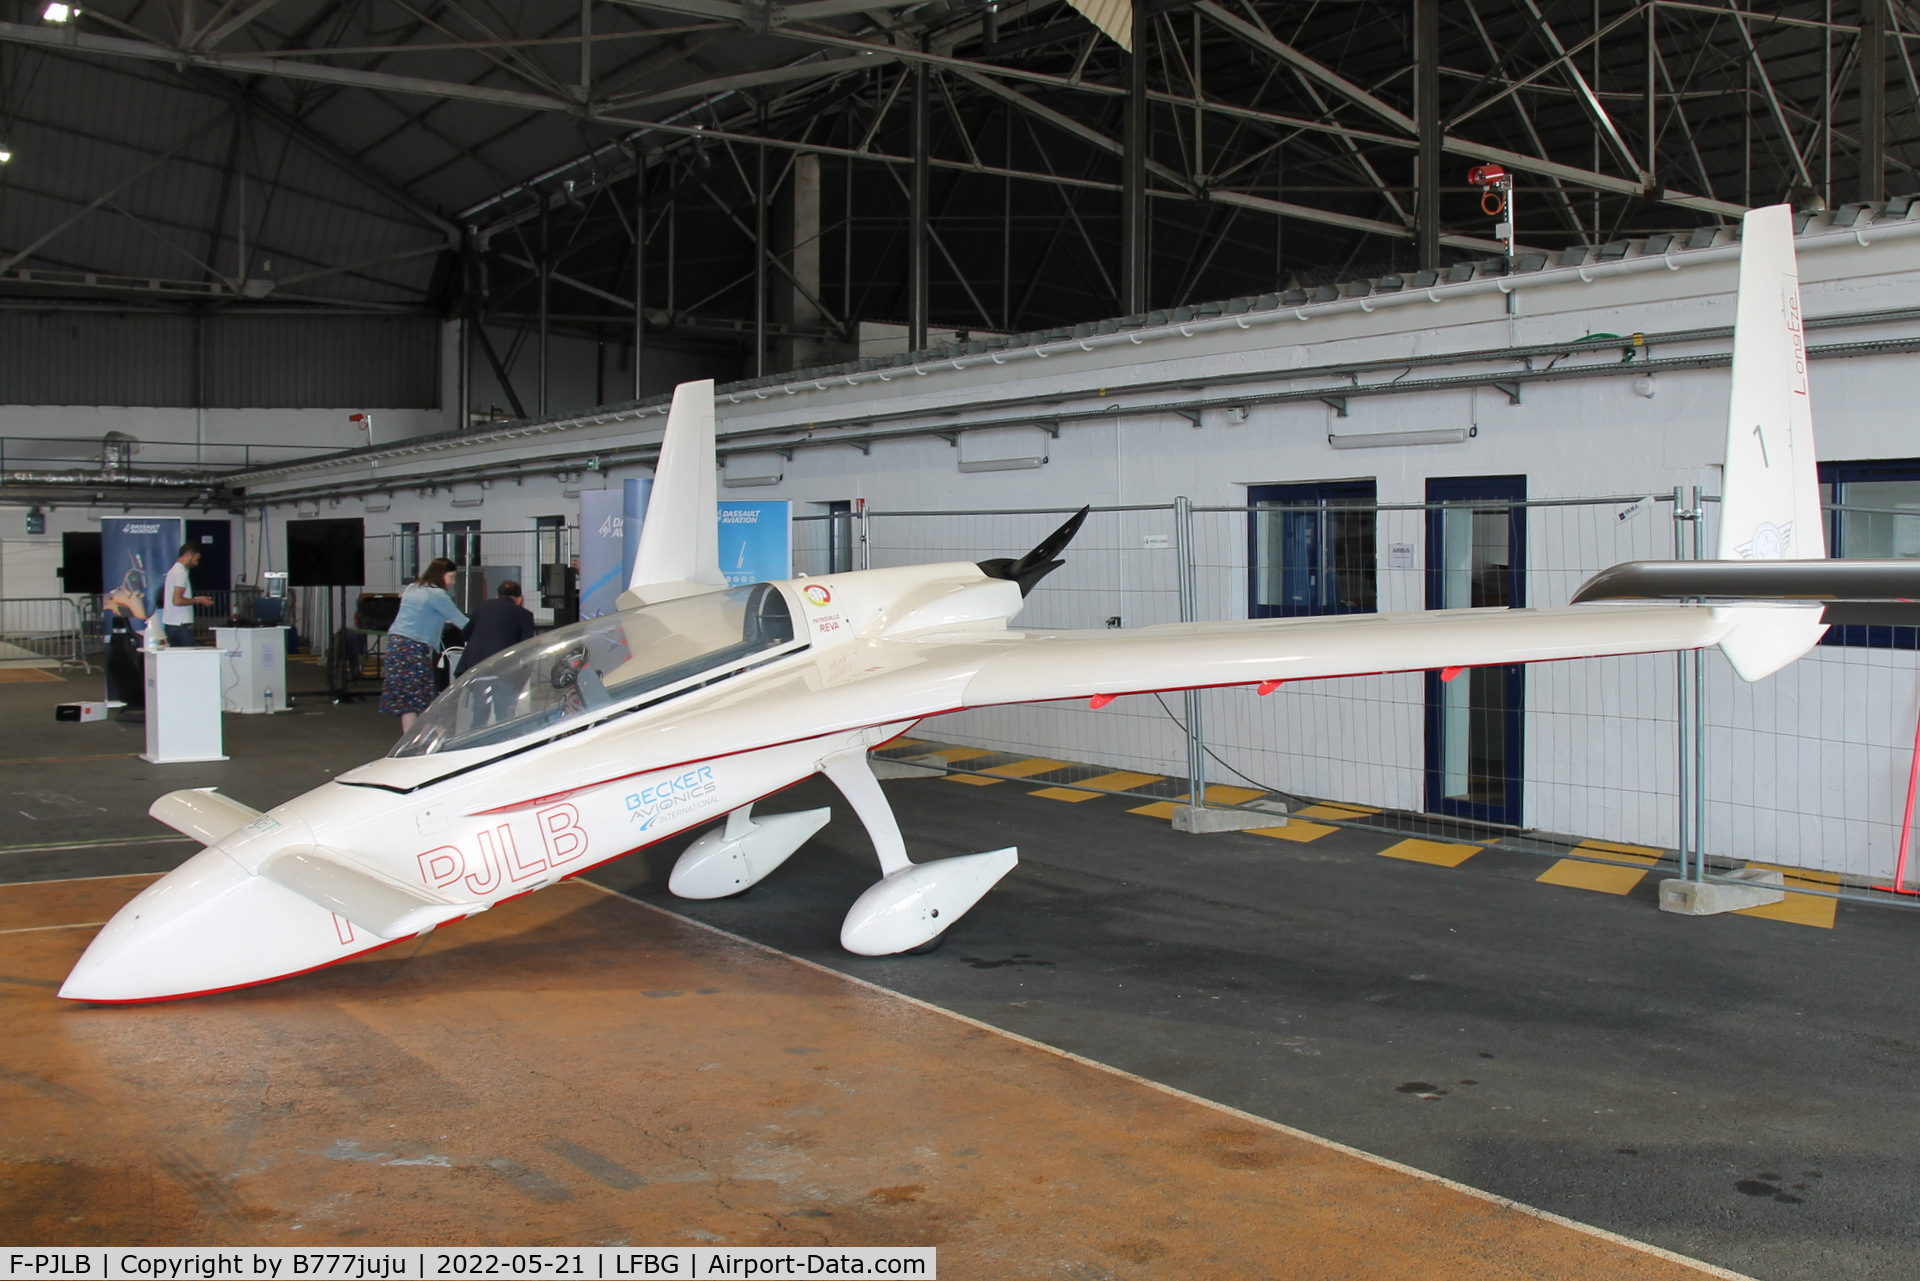 F-PJLB, Rutan Long-EZ C/N 1344, during Cognac airshow 2022